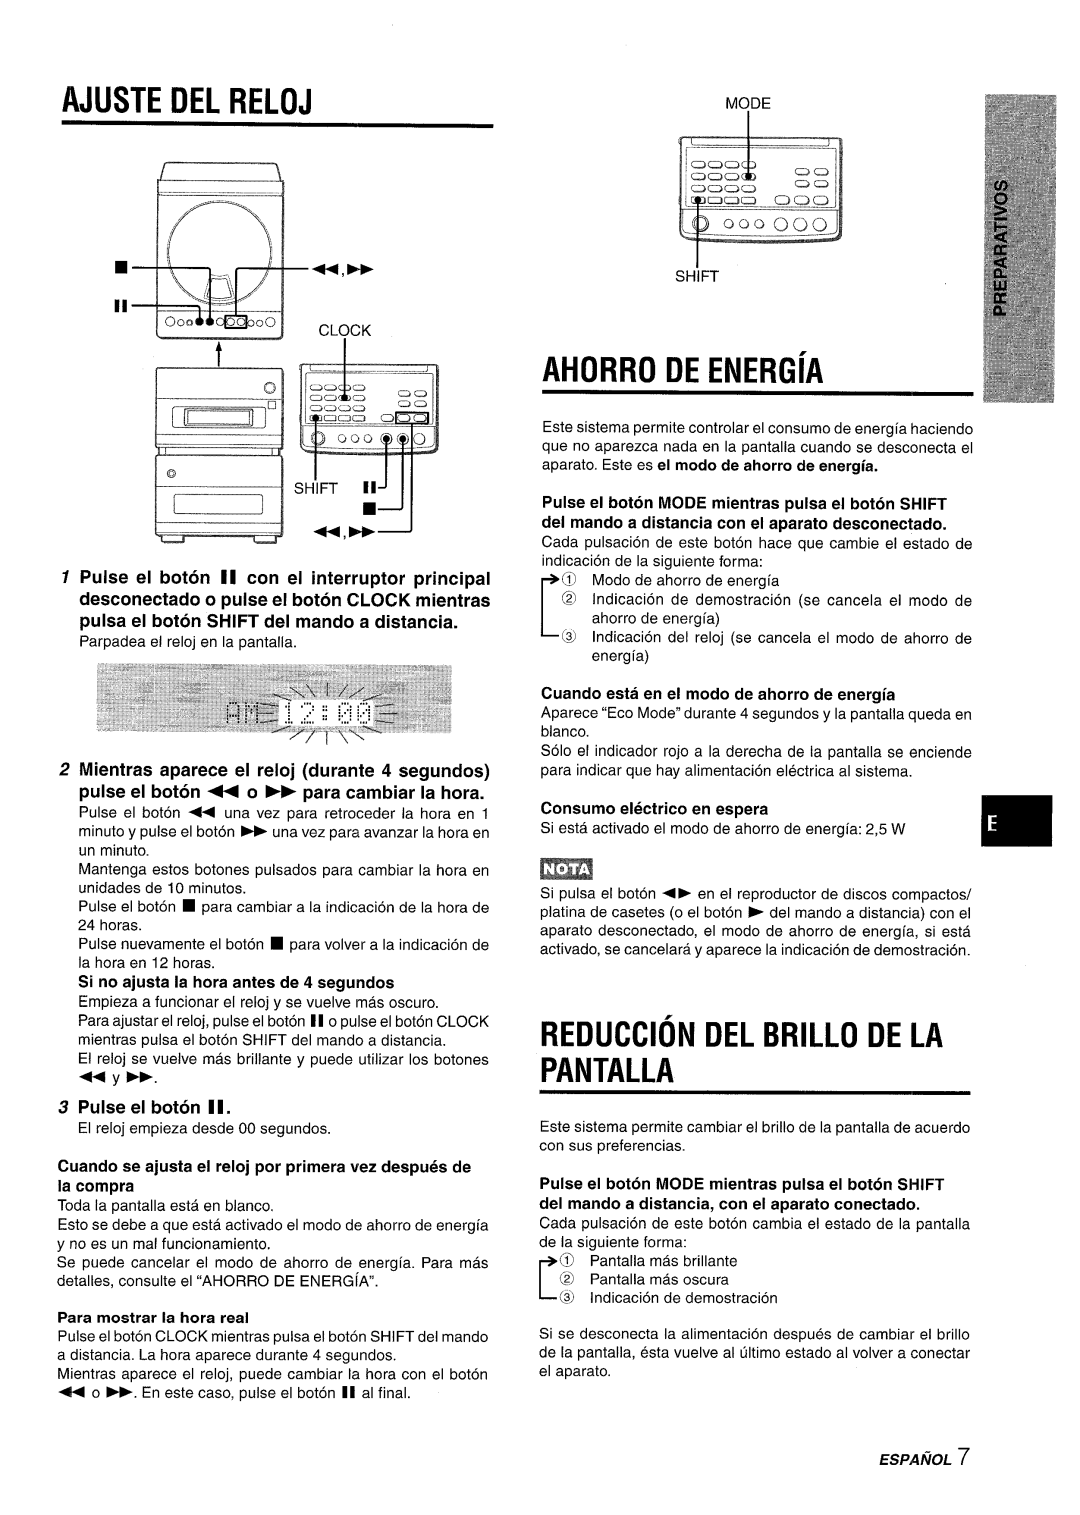 Aiwa XR-M88 manual Ajuste Del Reloj, m-l’, AHORRO DE ENERGiA, Reduccion Del Brillo De La Pantalla, Pulse el boton 